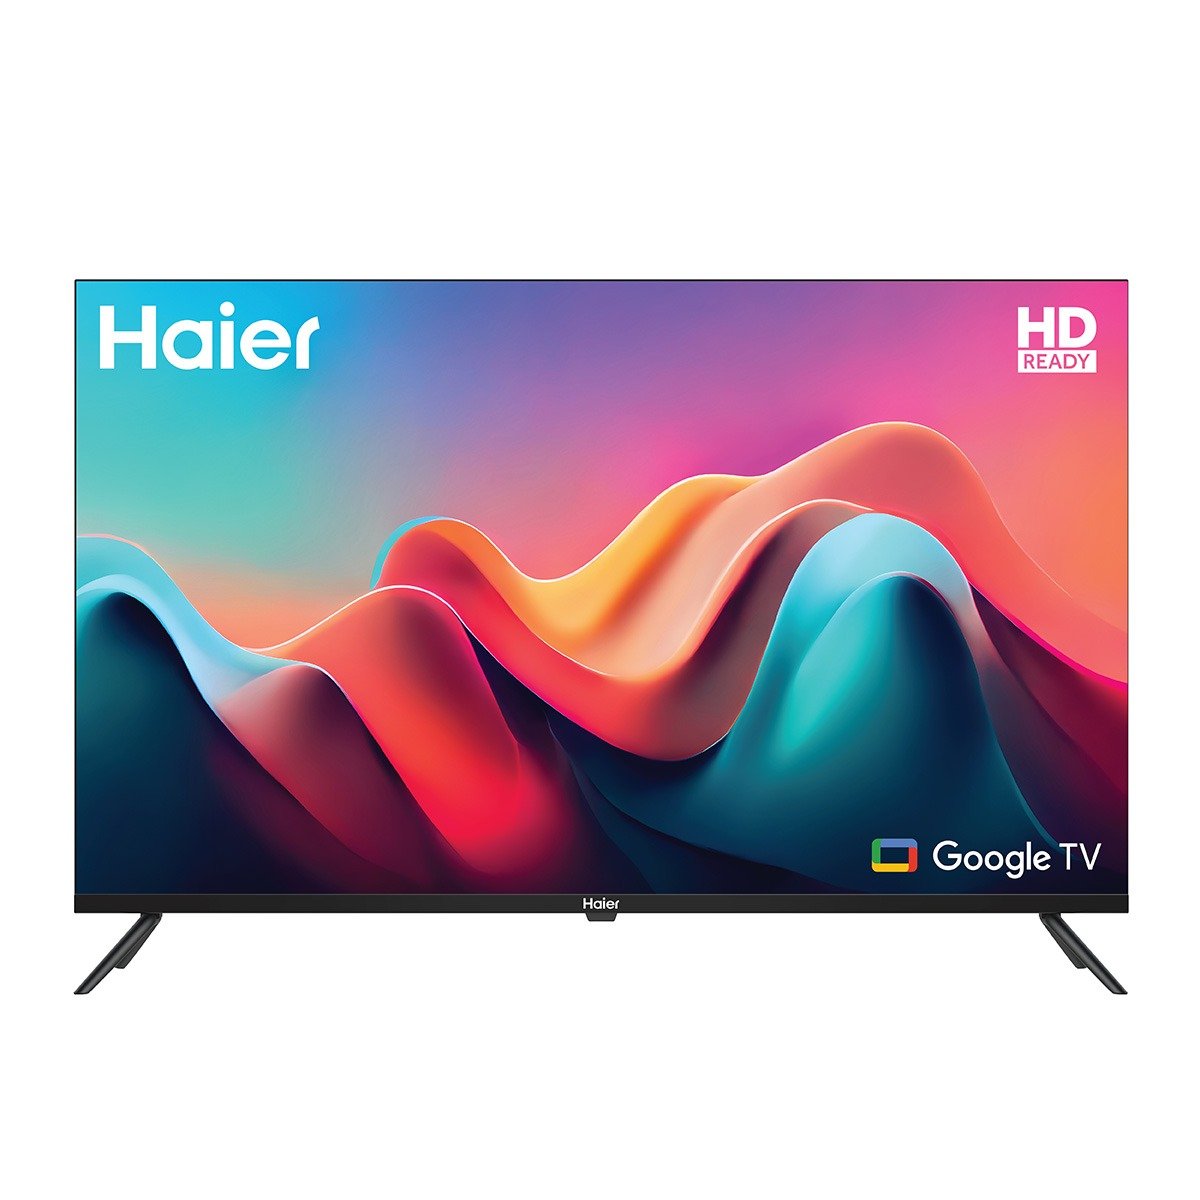 Haier 80 cm (32 inch) HD Ready LED Smart Google TV (LE32K800GT)